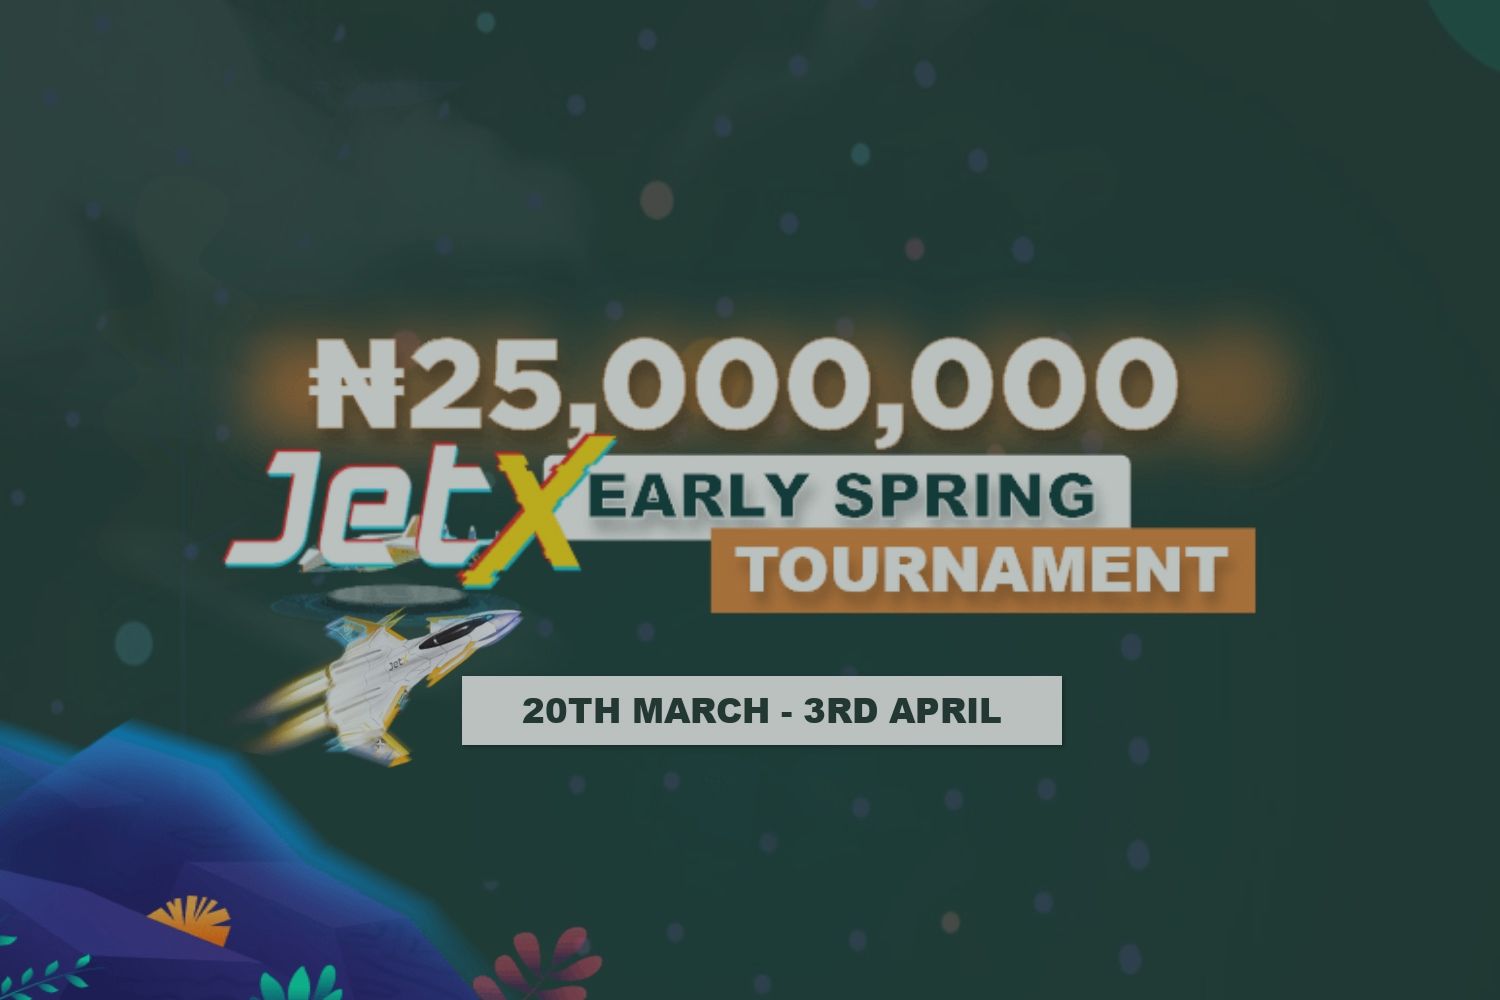 Promo Alert: ₦25M JetX Early Spring Tournament